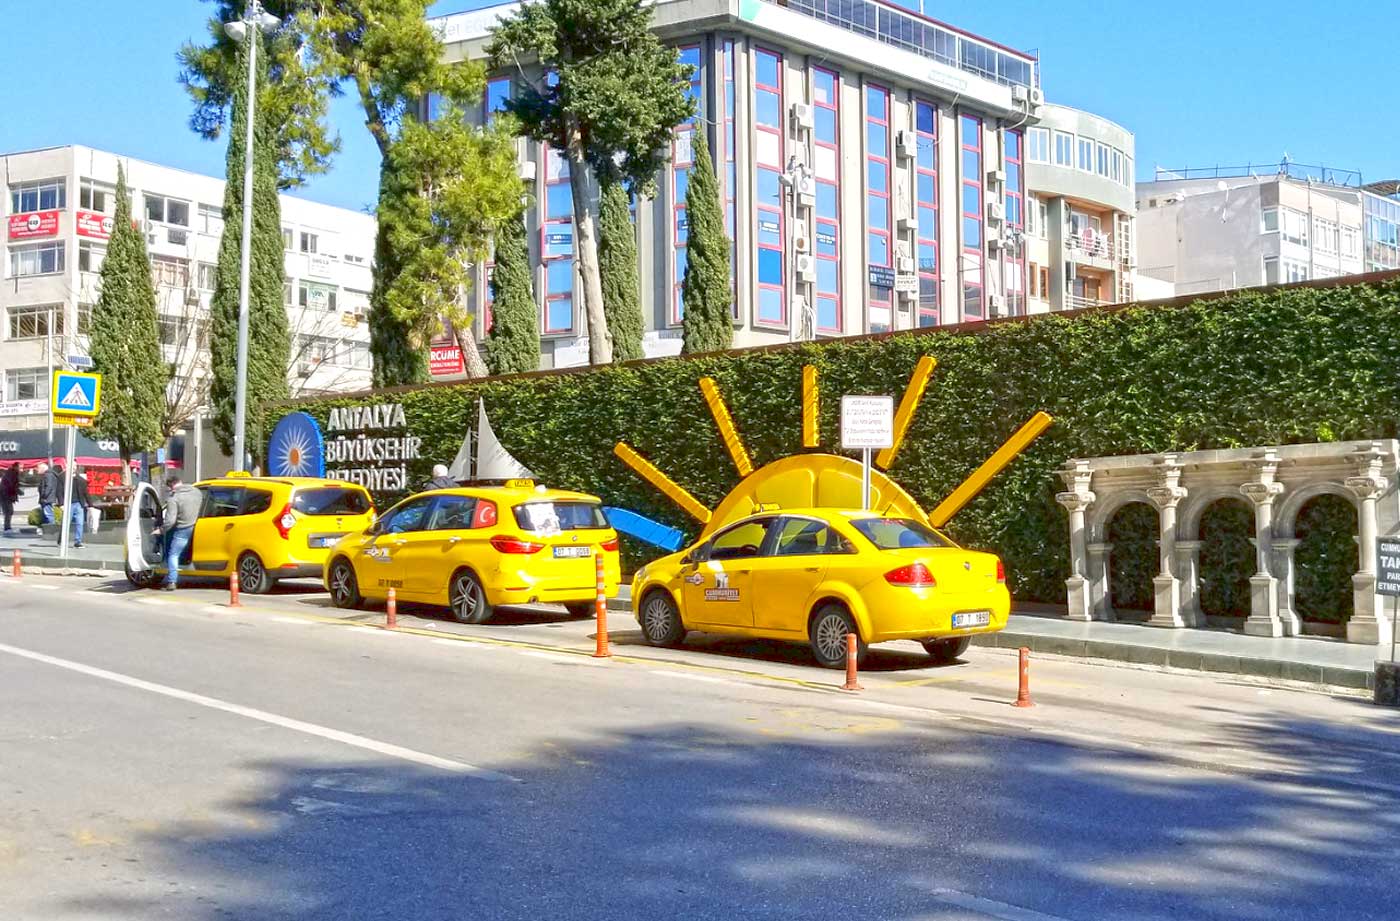 Antalya City Public Transport Taxi